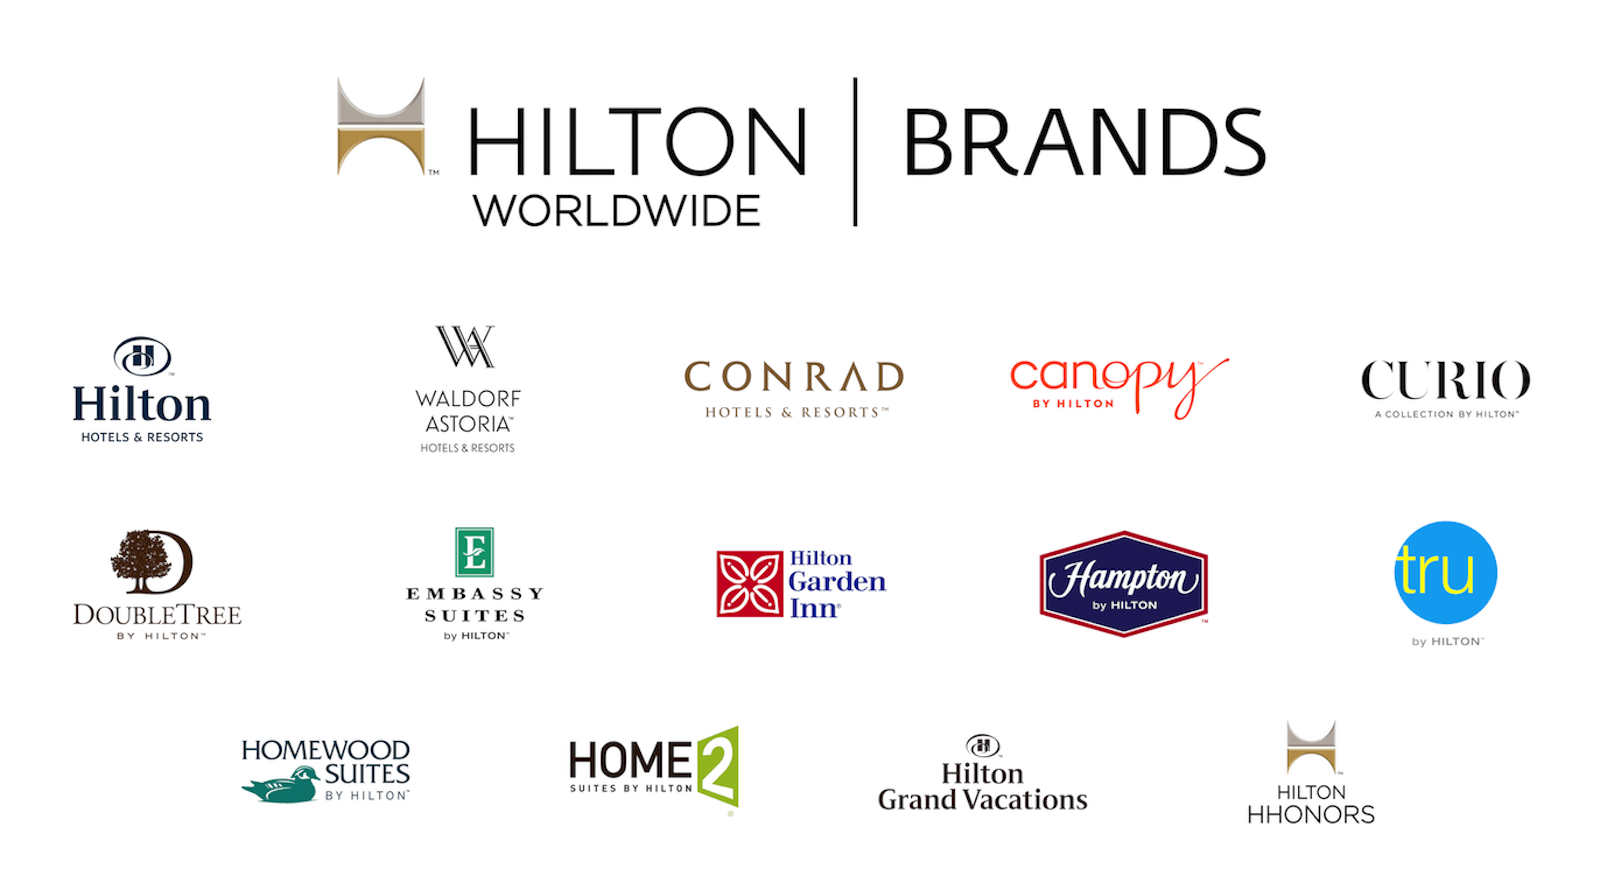 Hilton hotel brands